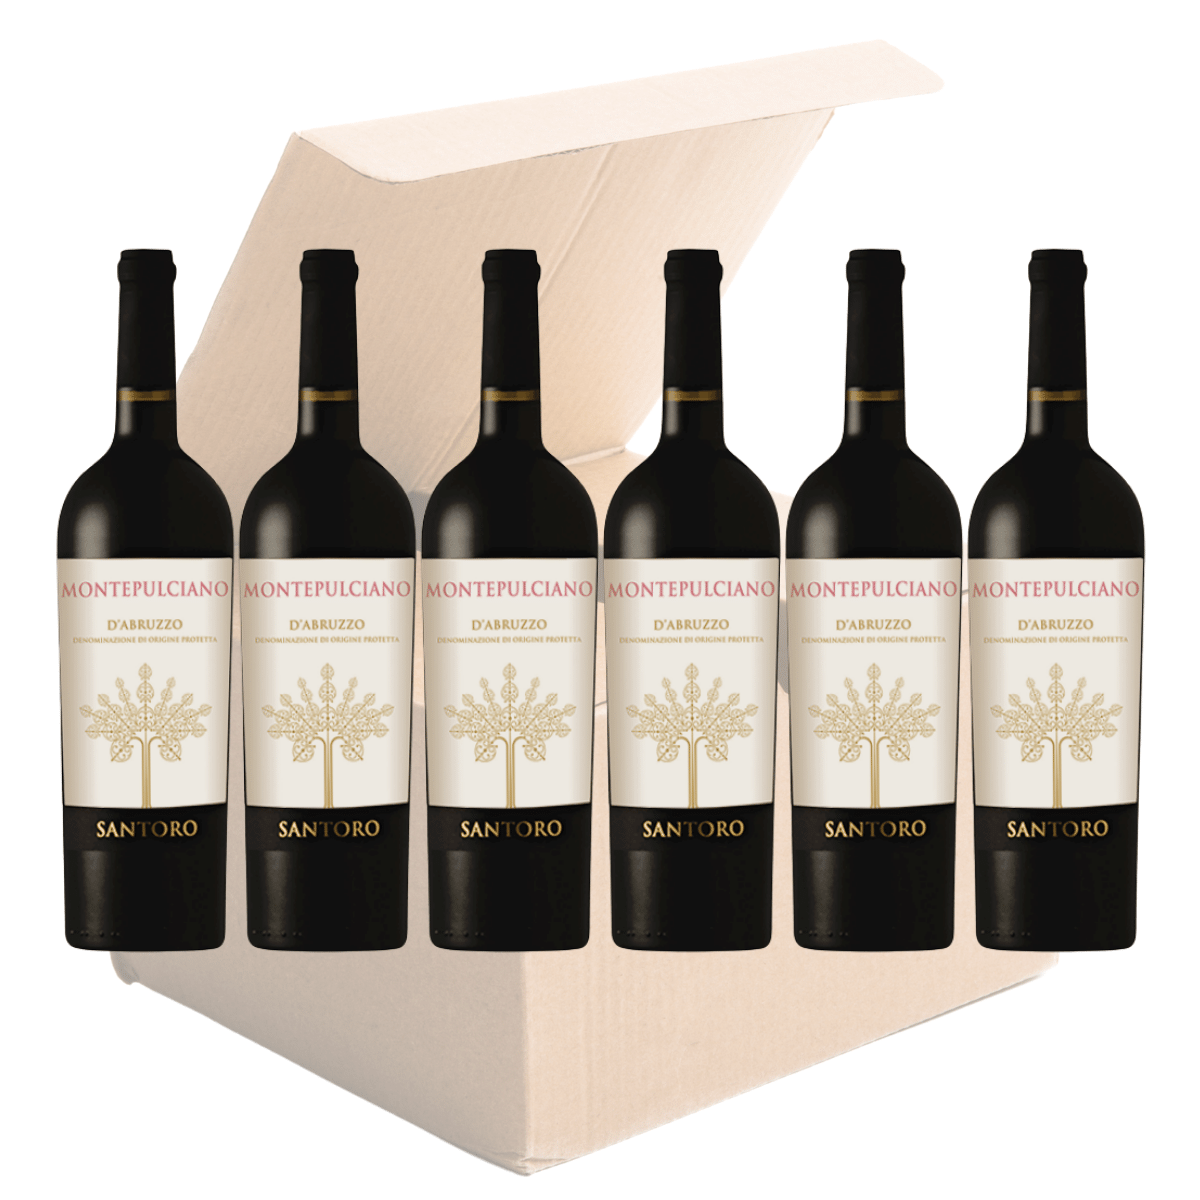 Santoro Montepulciano d'Abruzzo wine bottle0